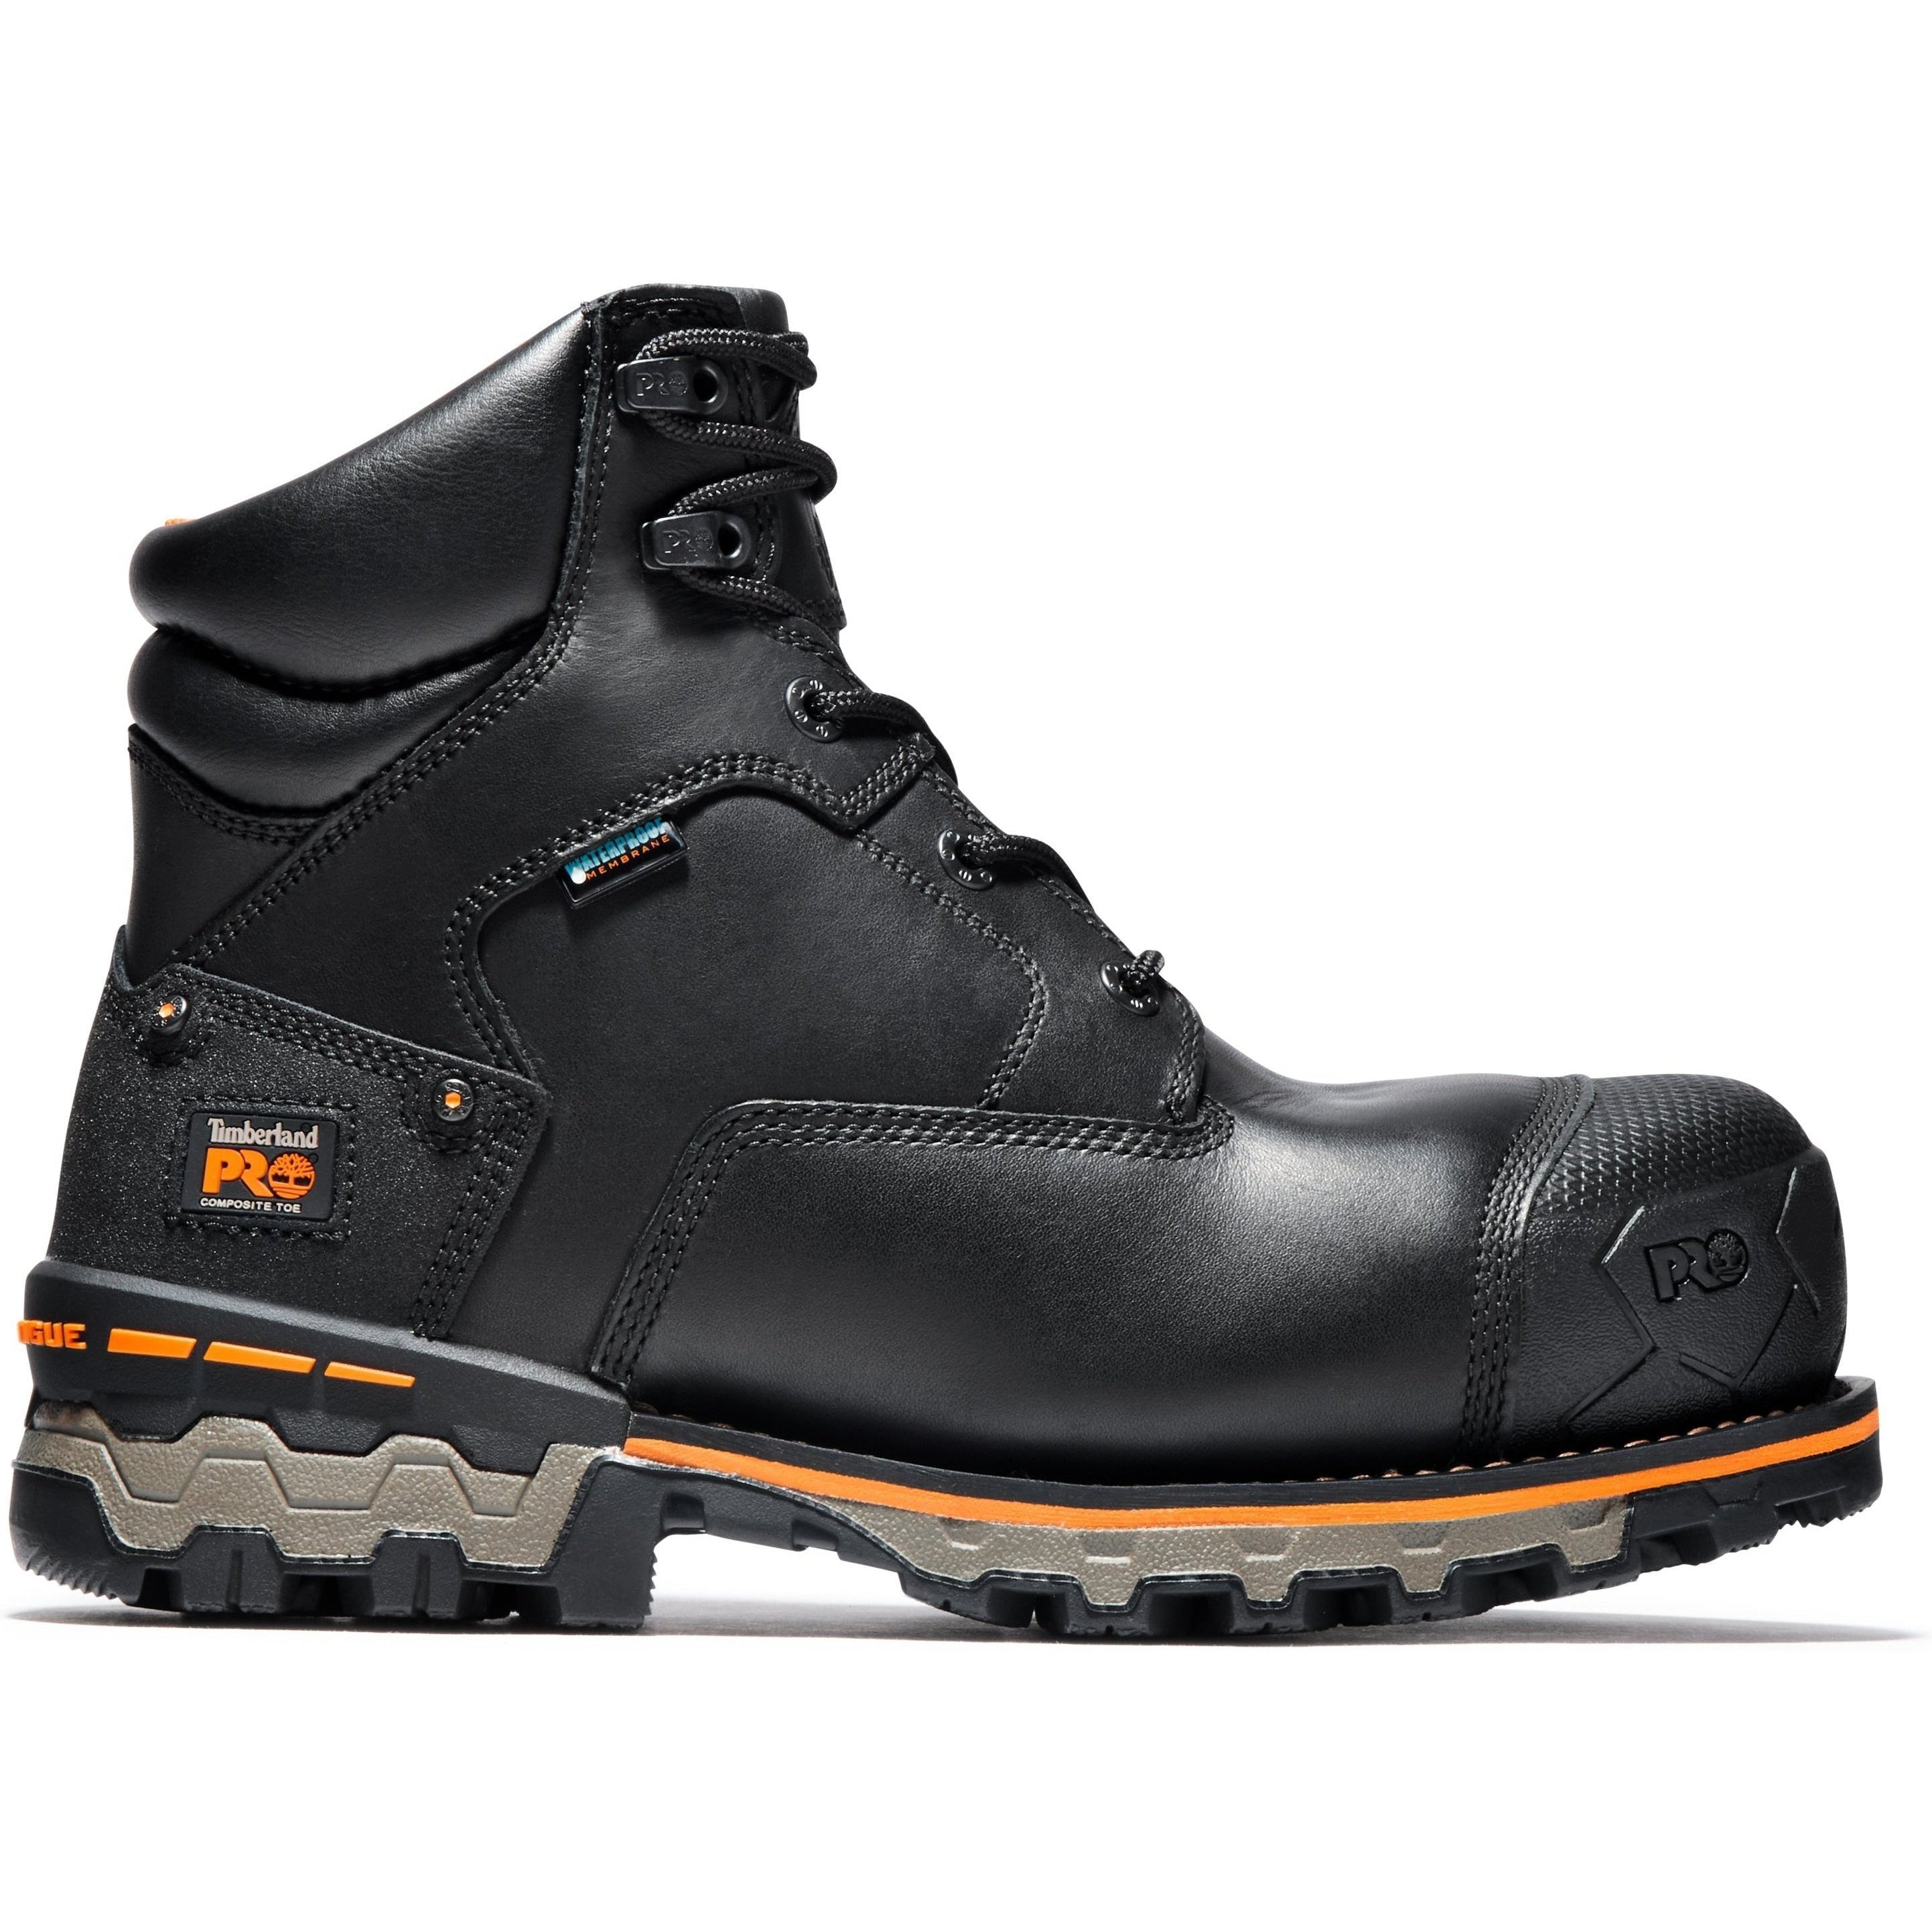 Timberland PRO Men's Boondock 6" Comp Toe WP Work Boot TB1A1FZP001  - Overlook Boots